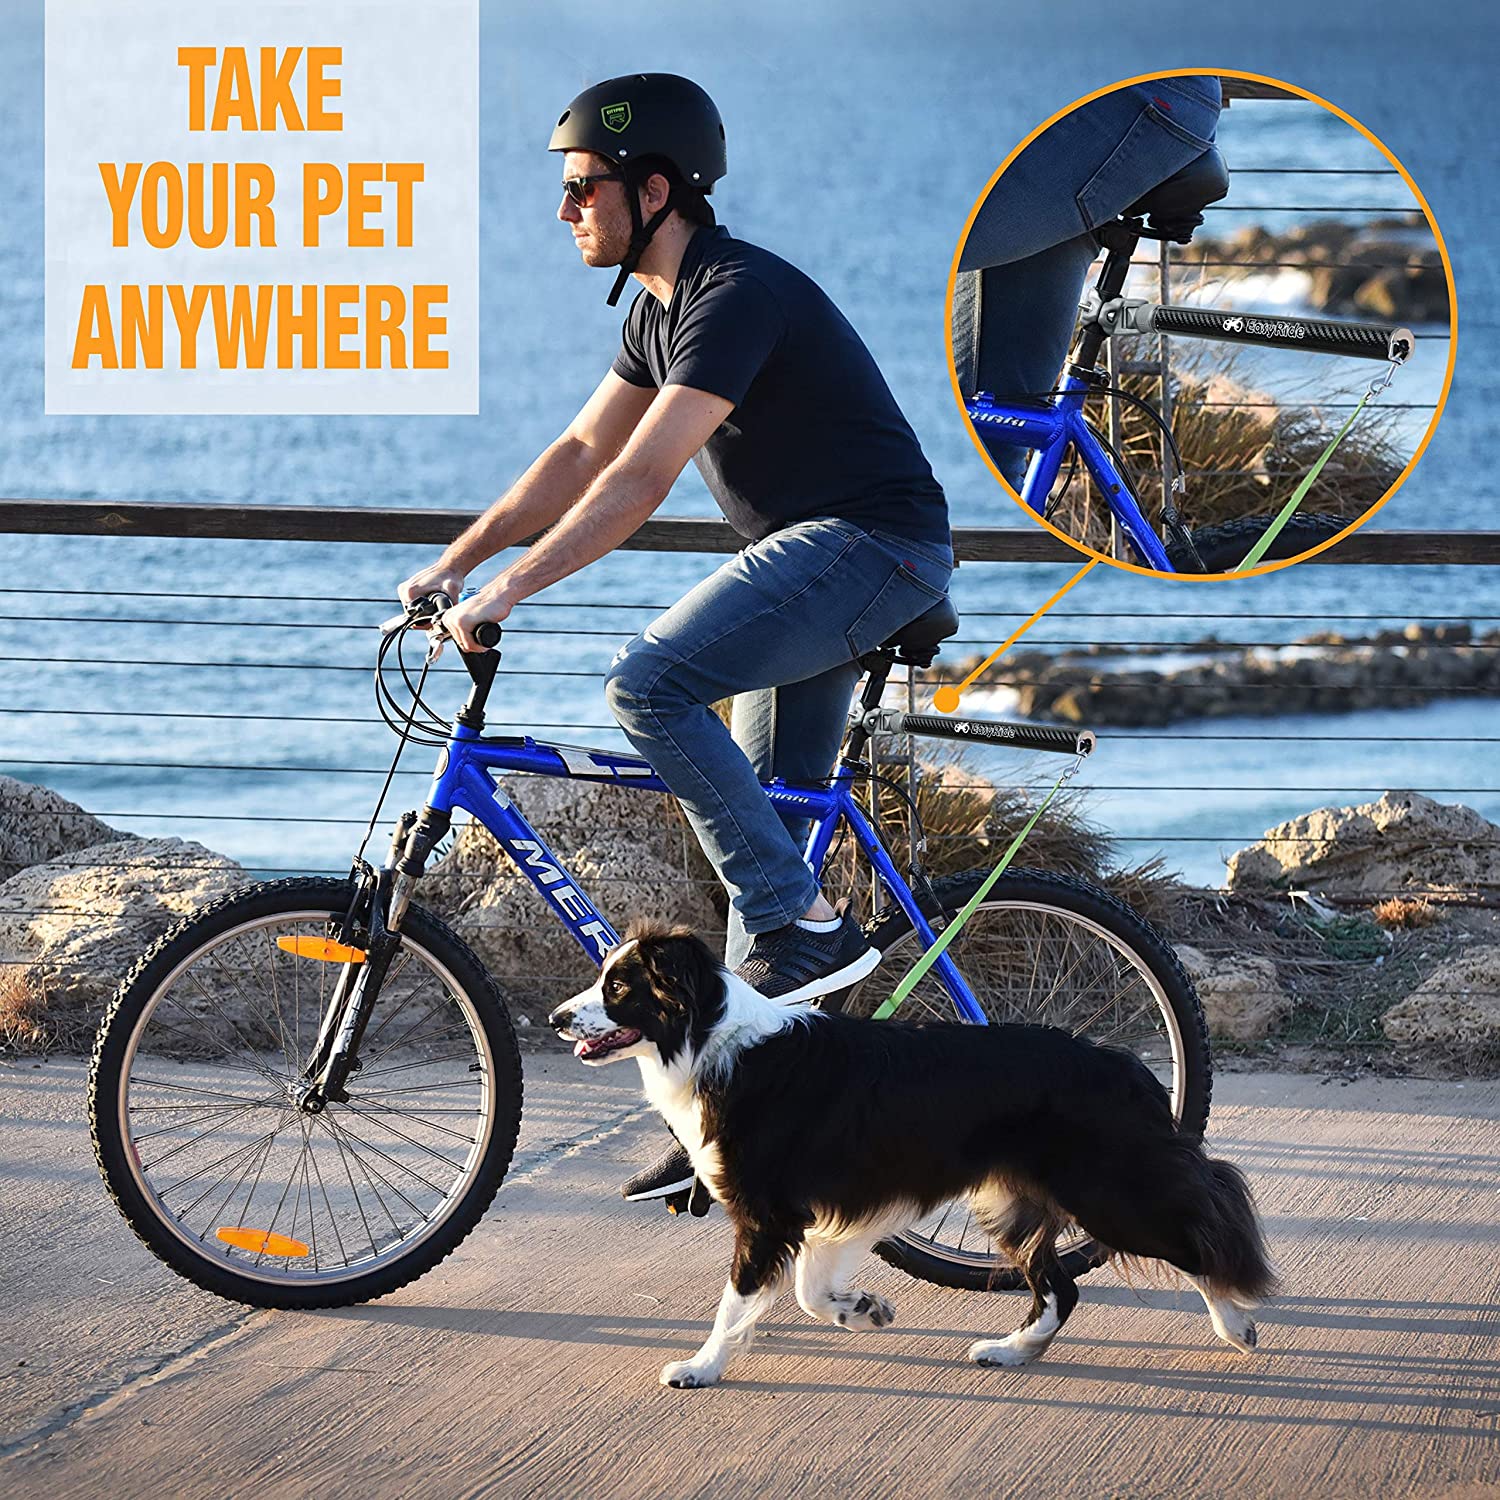 Rotating Dog Bike Leash allows you to take your pet anywhere